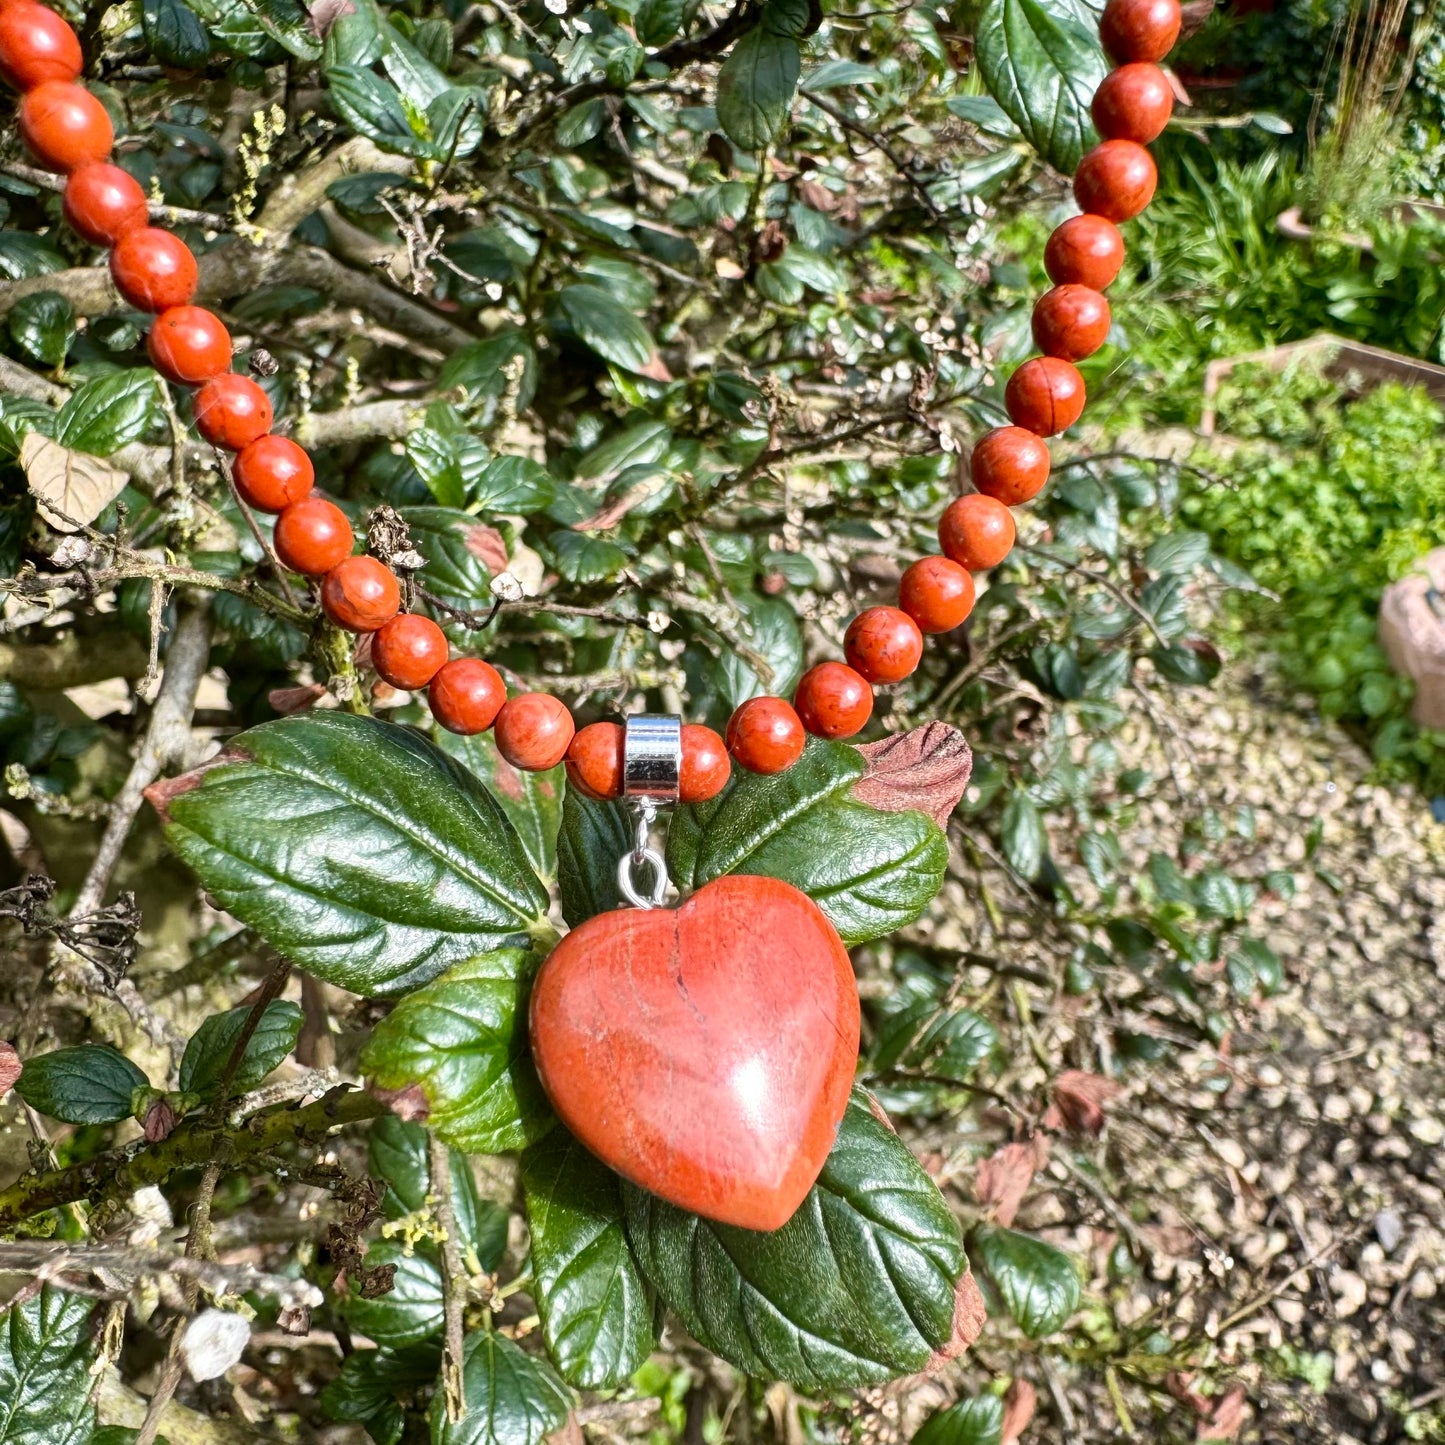 Red Jasper Heart Charm Choker Necklace ❤️